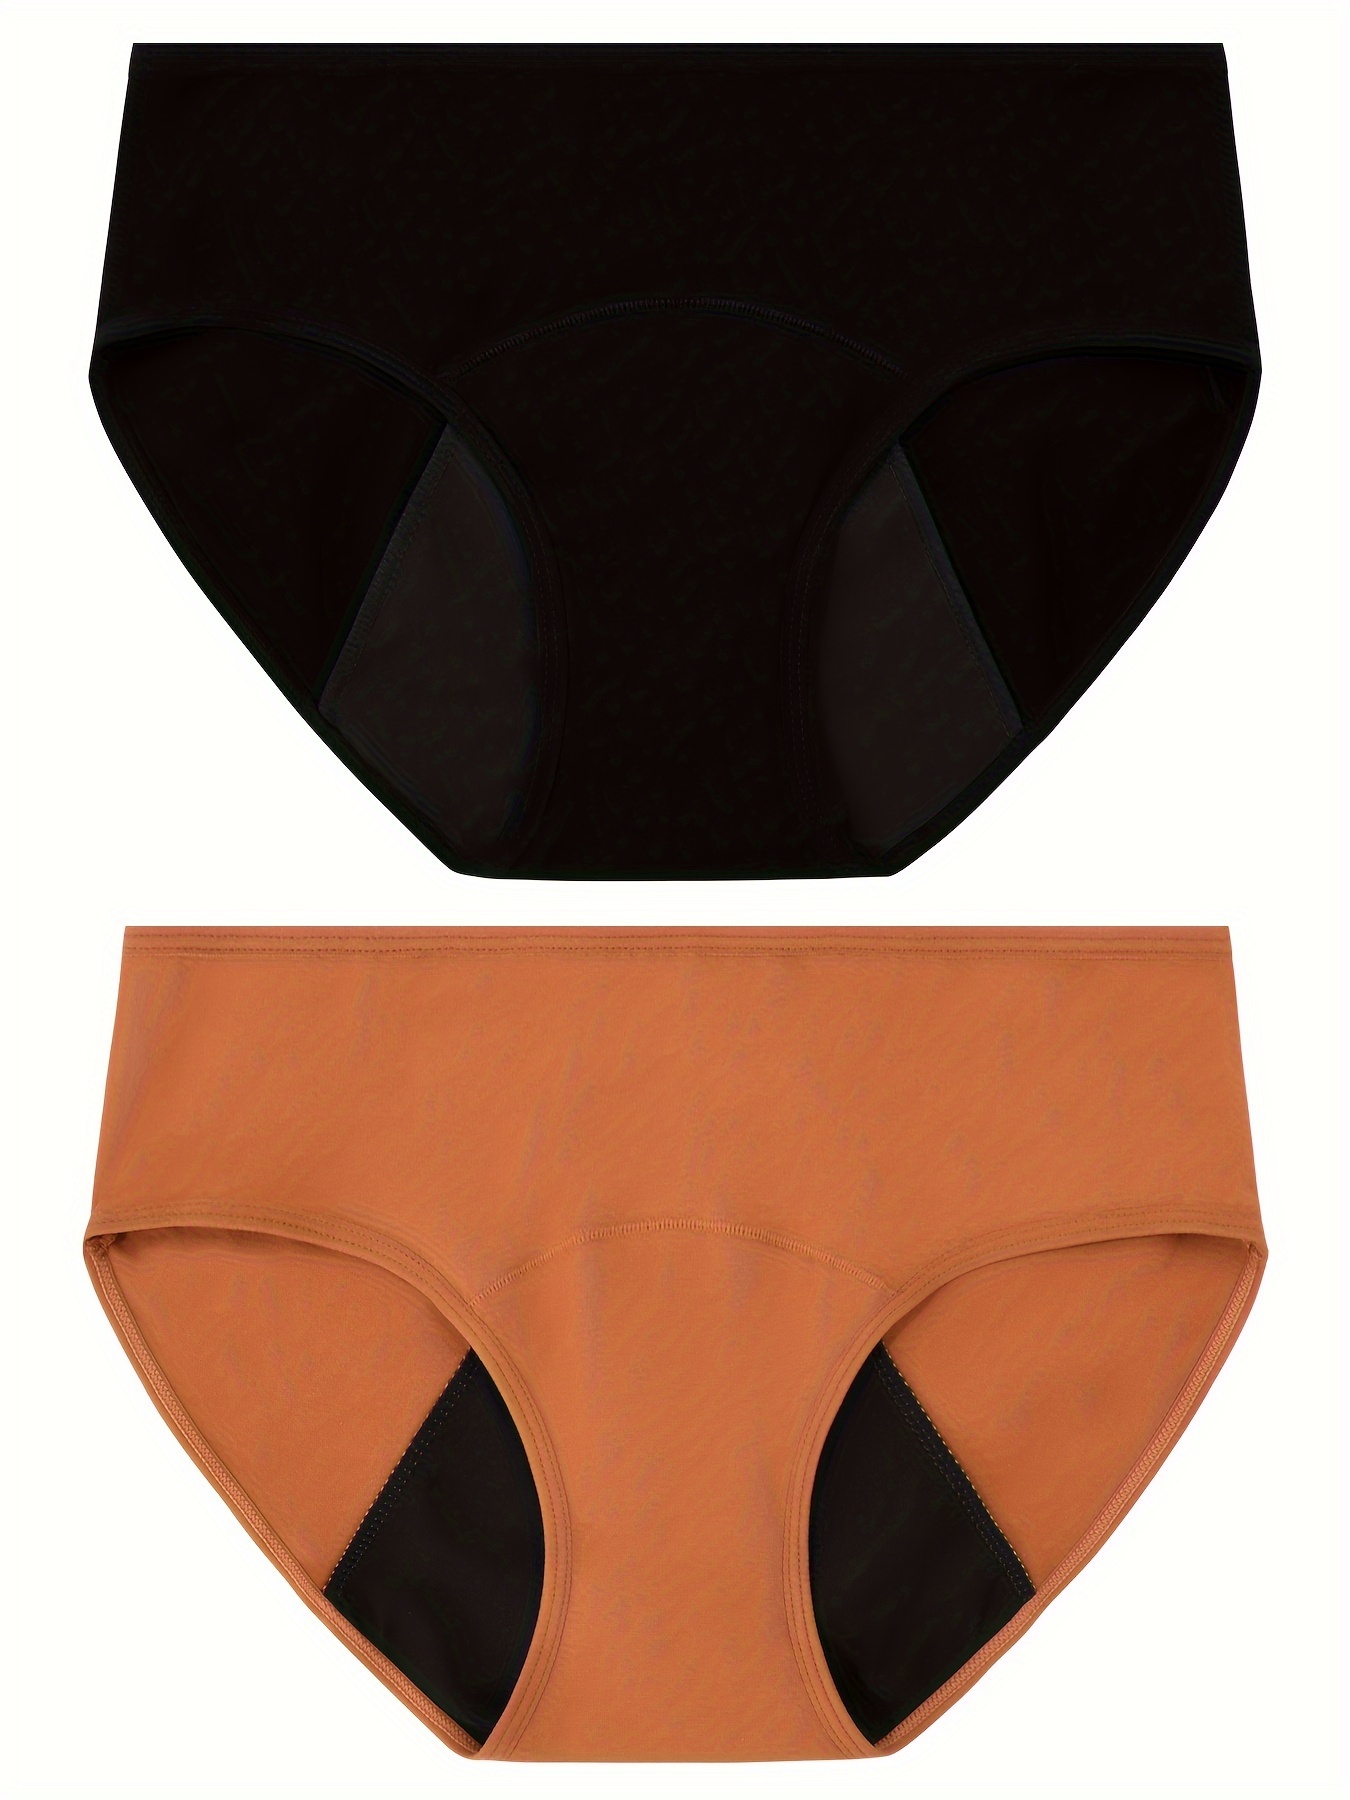 HATSURE Period Panties Leak Proof Underwear for Women Cotton Protection  Menstrual Briefs (4 Pack)